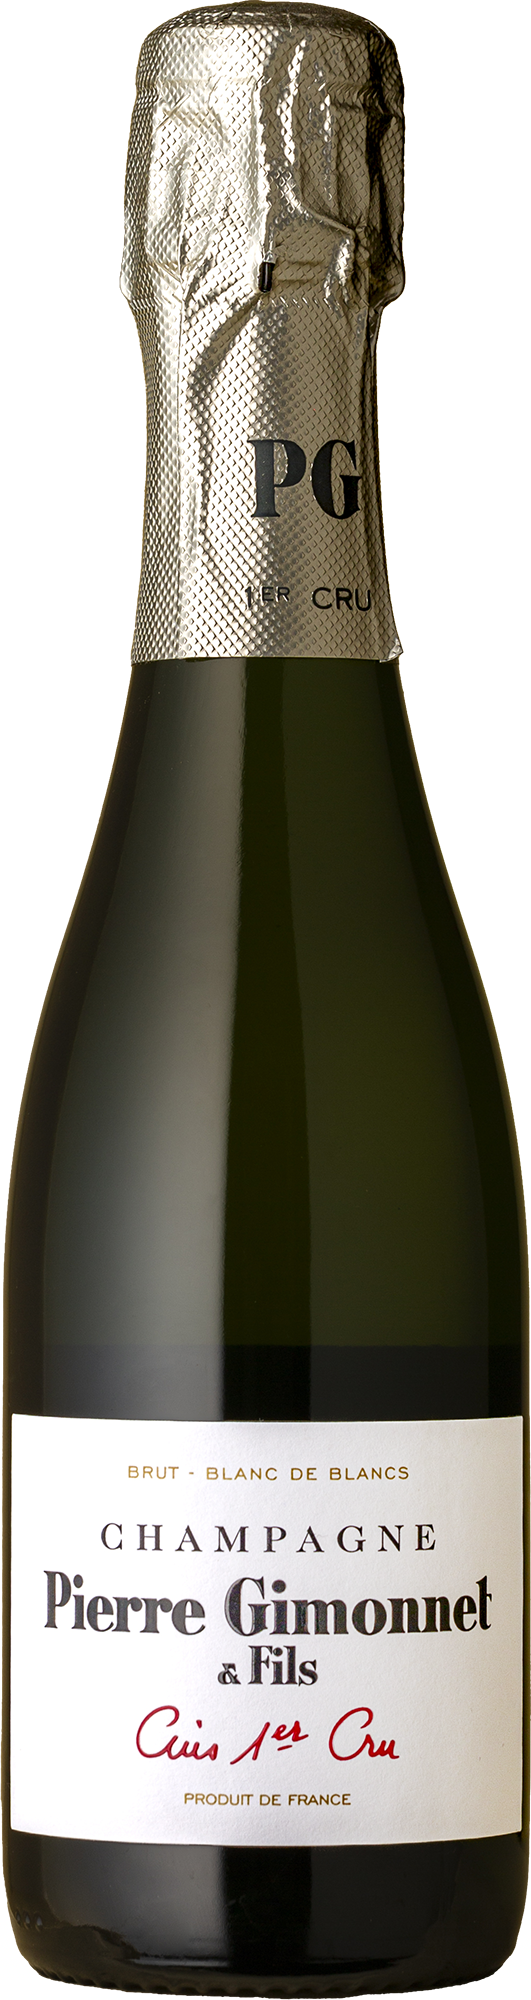 Pierre Gimonnet & Fils - Cuis 1er Cru 375mL NV Sparkling Wine